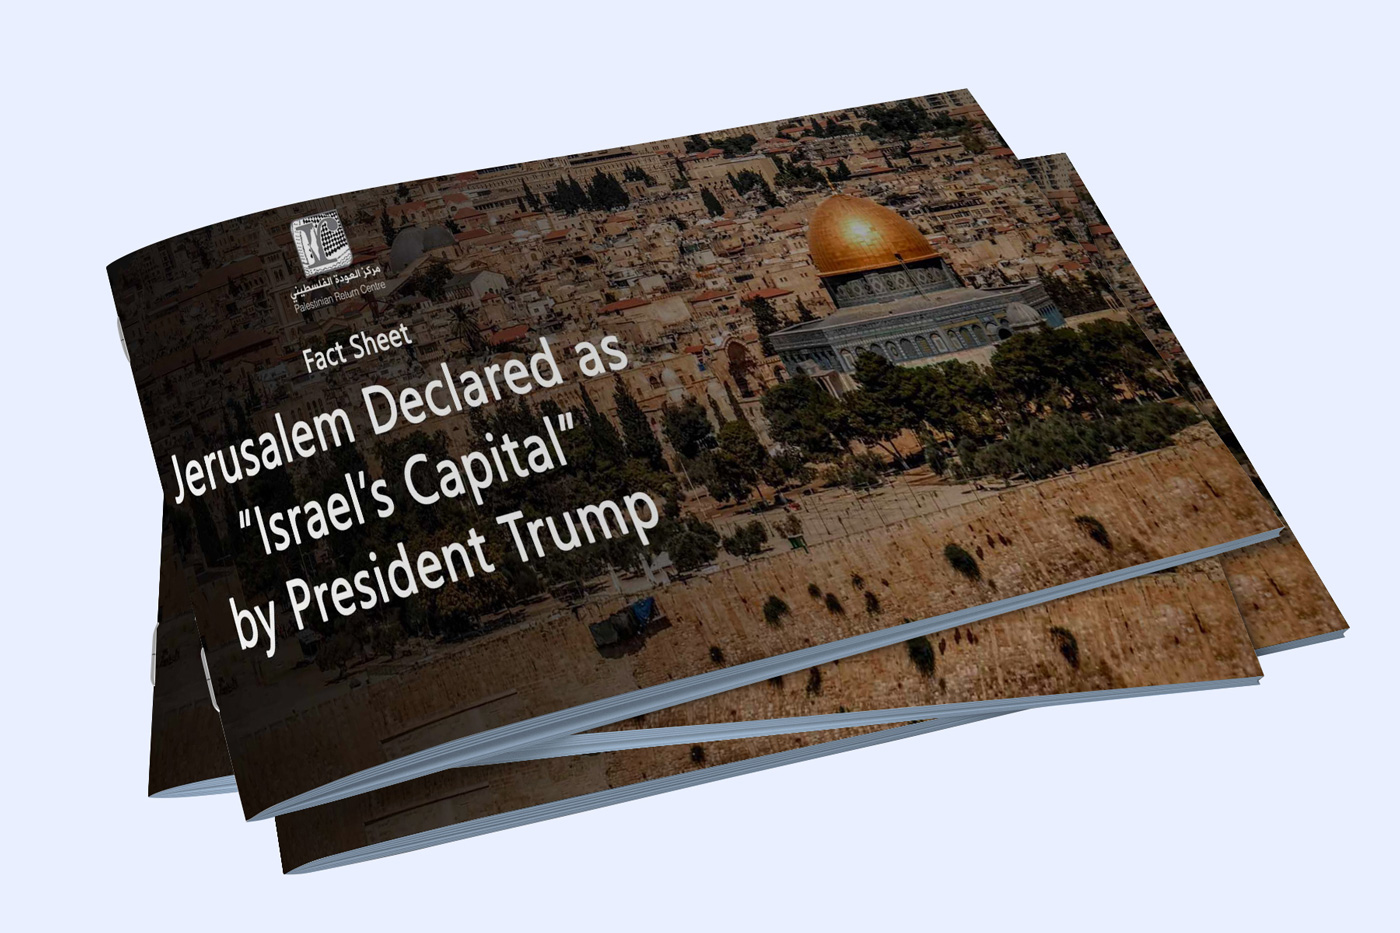 Jerusalem declared as “Israel’s Capital” by President Trump